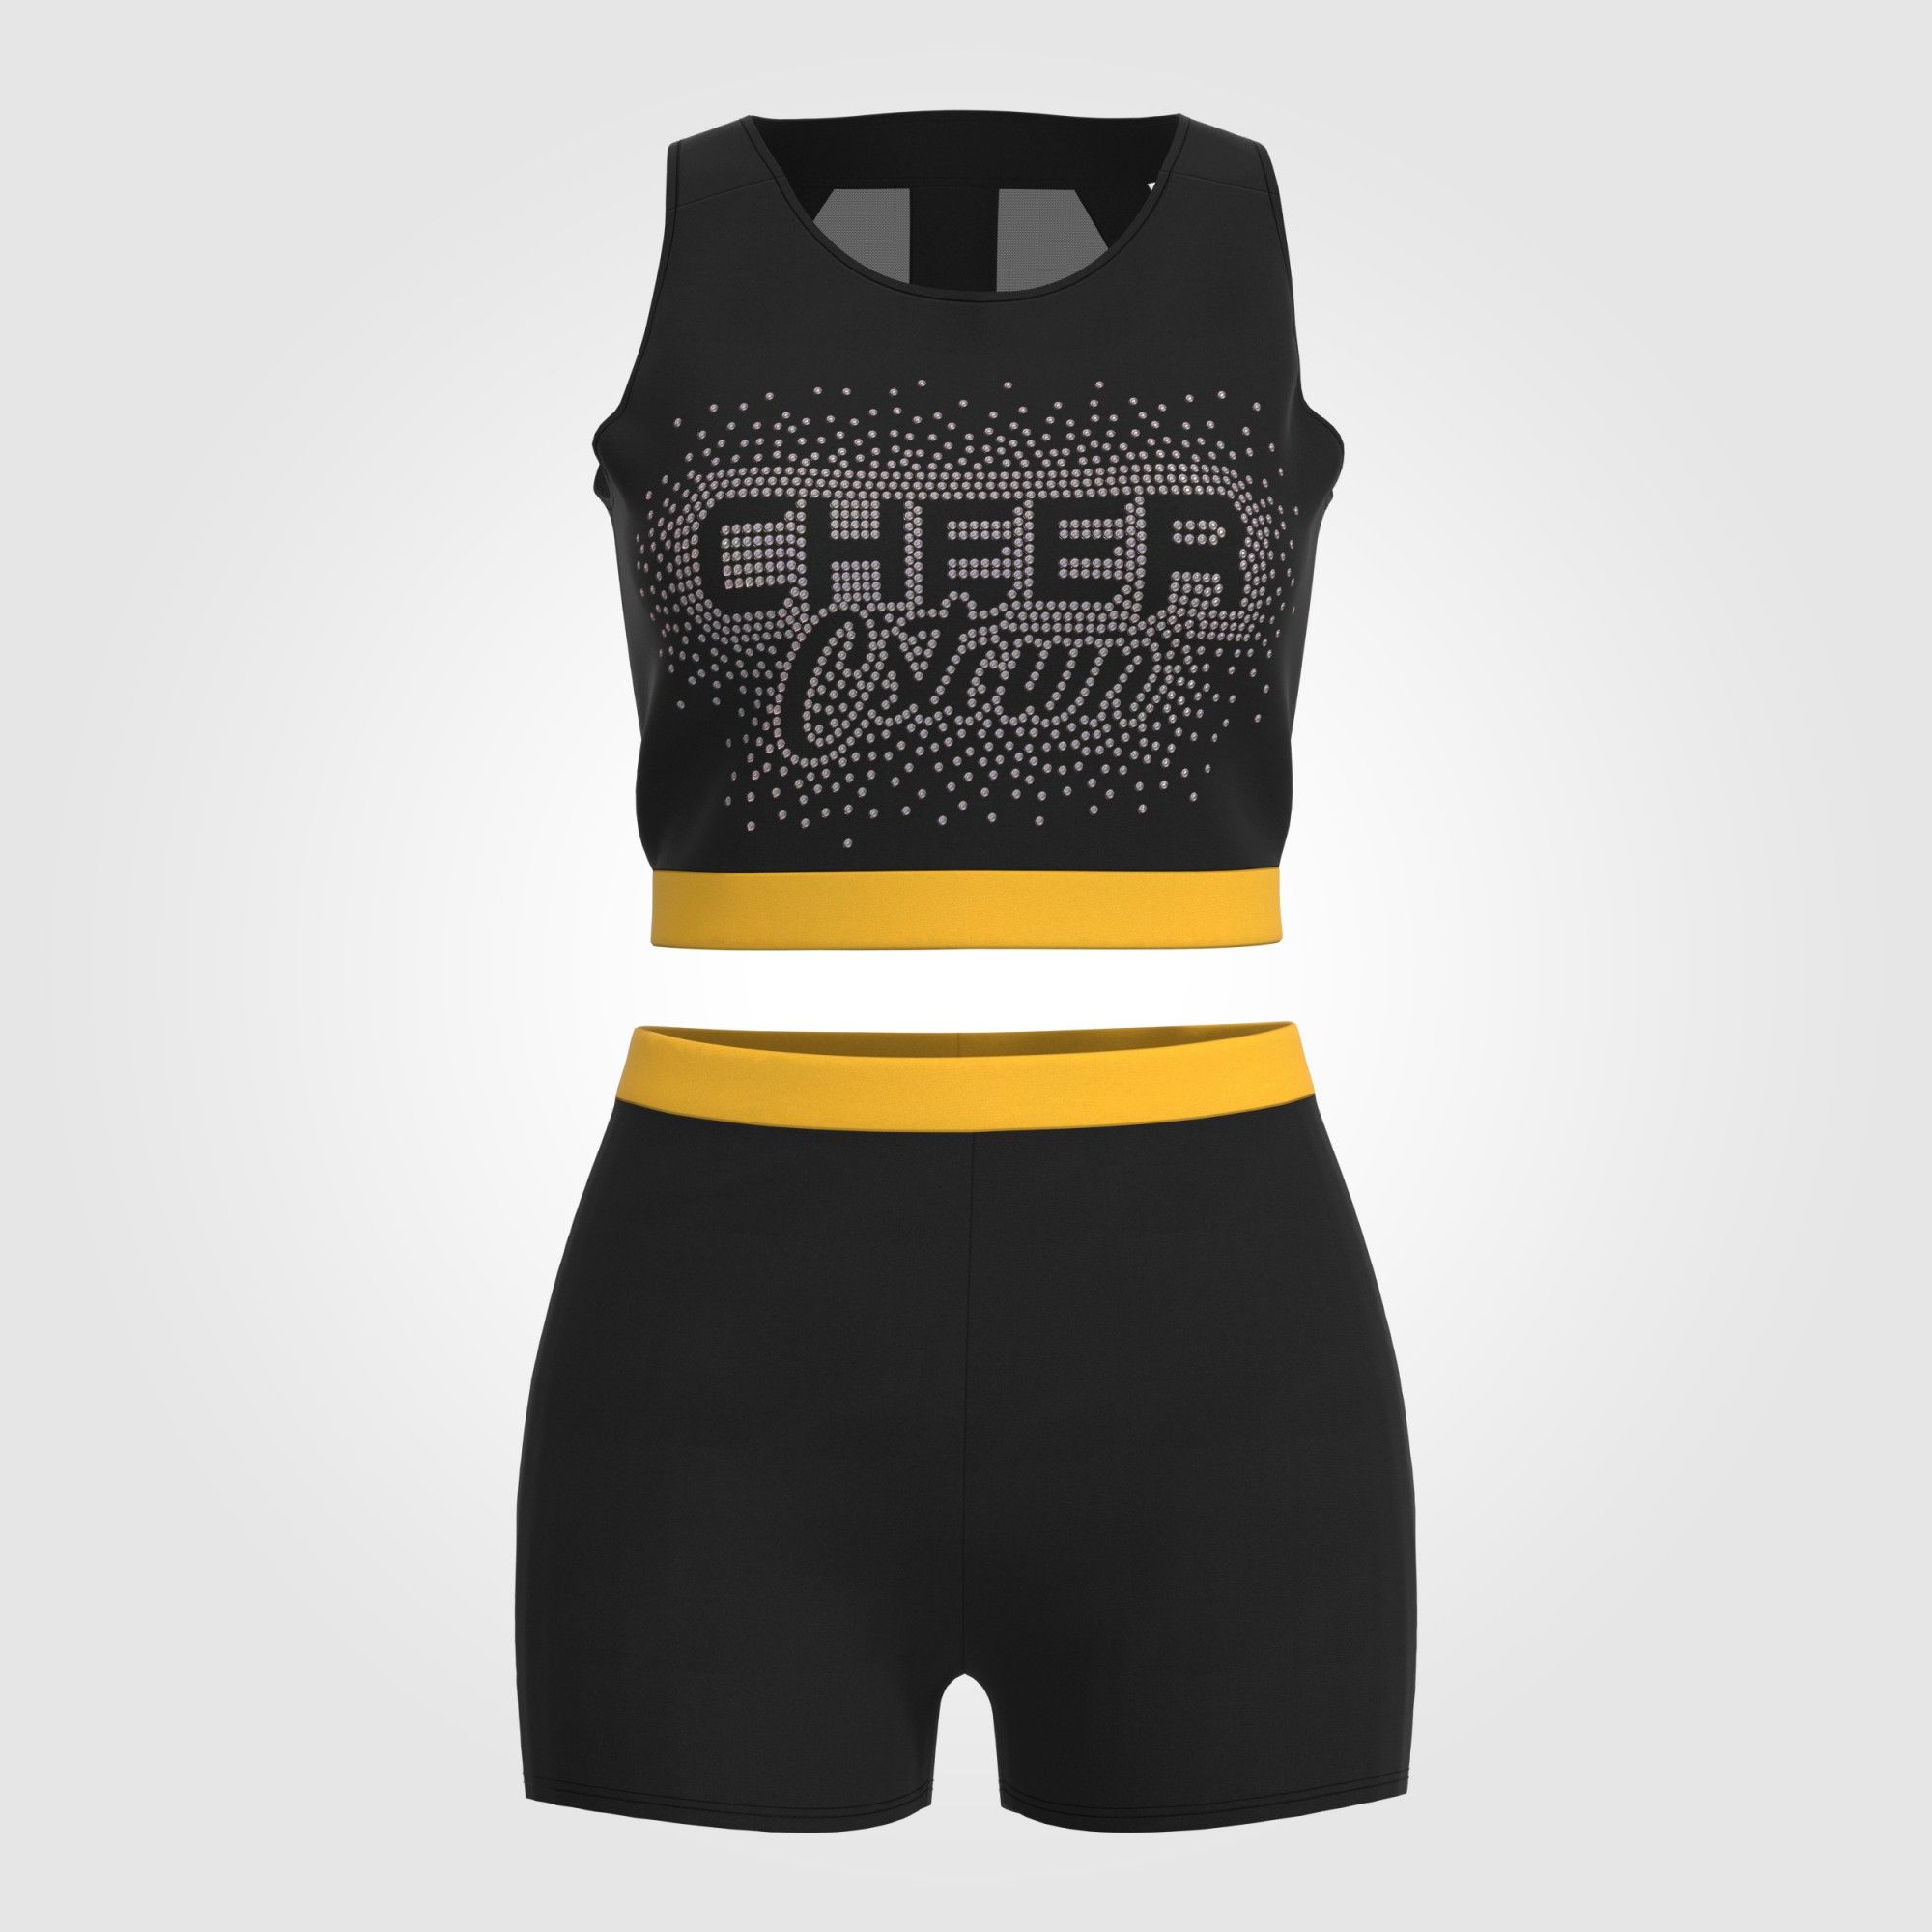 youth blue and yellow cheer uniform,midriff cheerleading uniforms